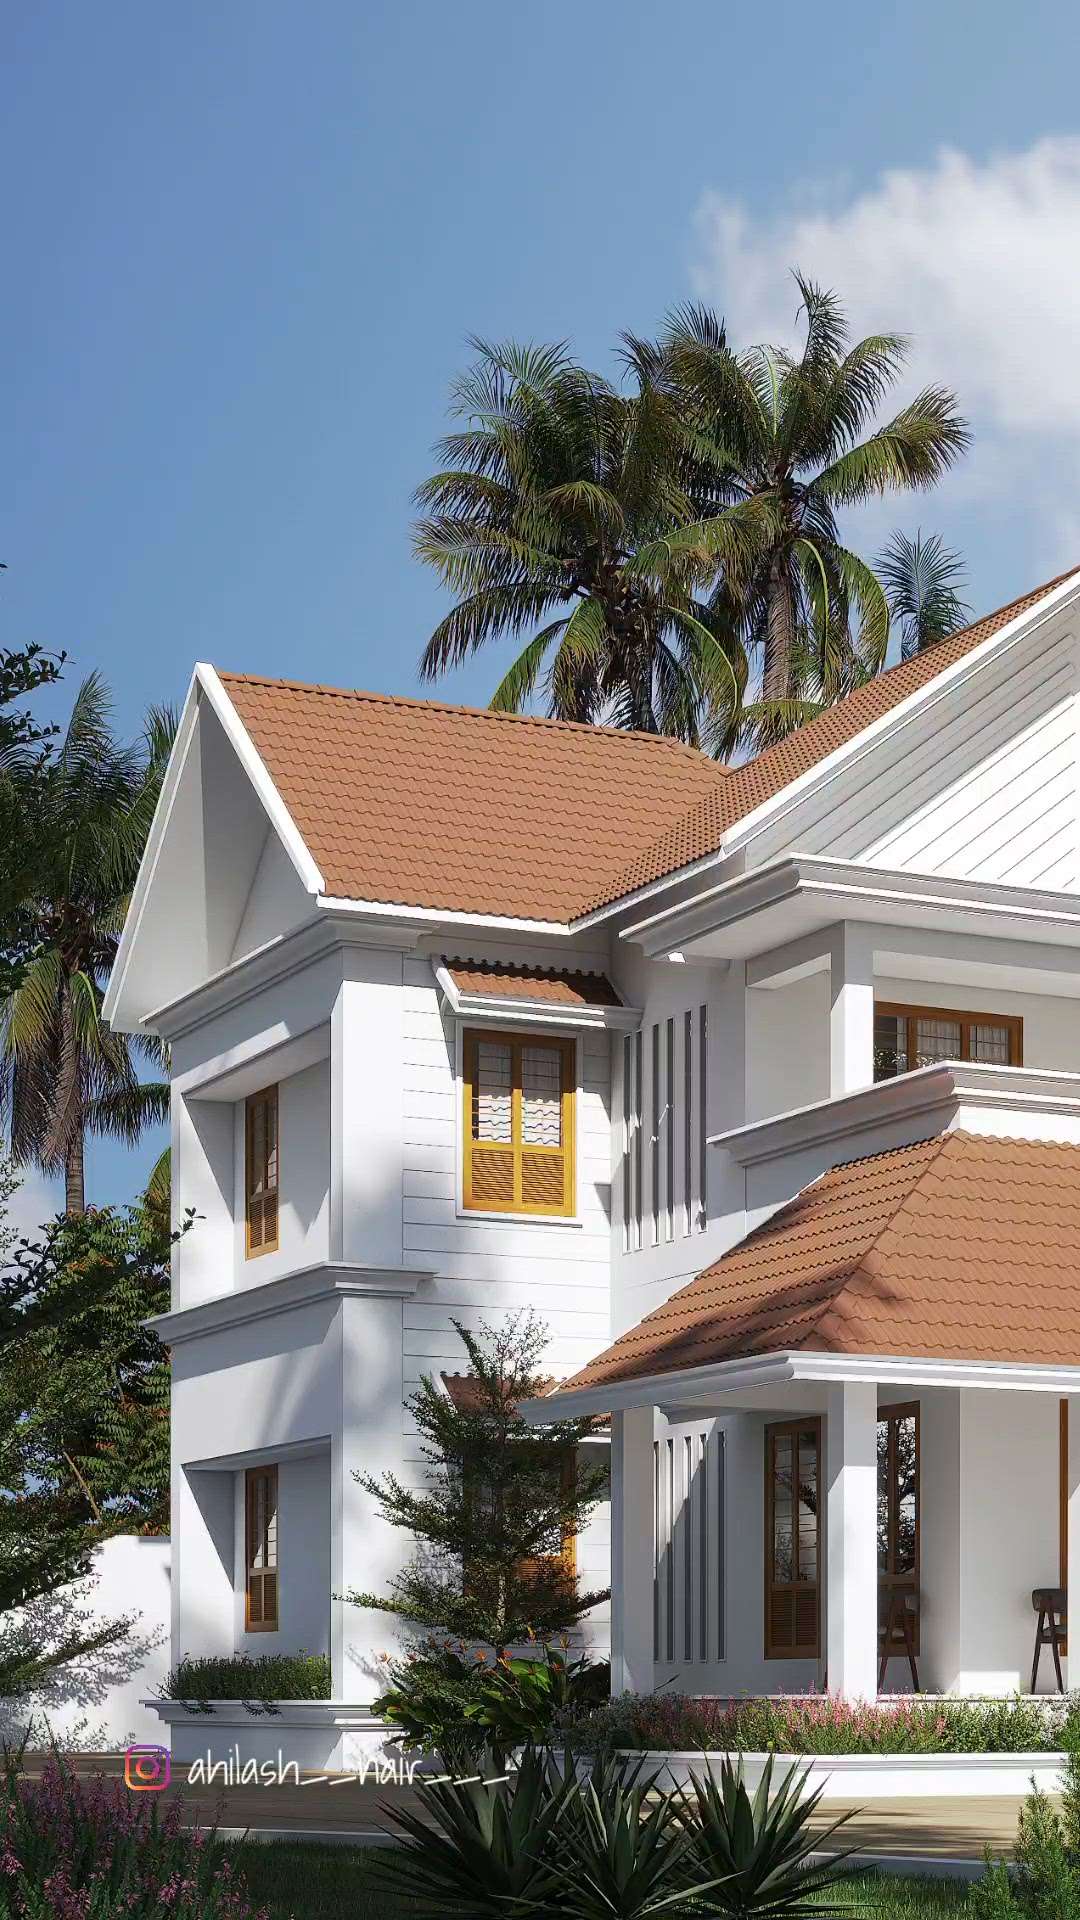 New work 🌟 

2370 sqft 

4bhk...

 #KeralaStyleHouse  #keralaarchitectures  #keralahomedesignz  #kerala_architecture  #keralahomeplans